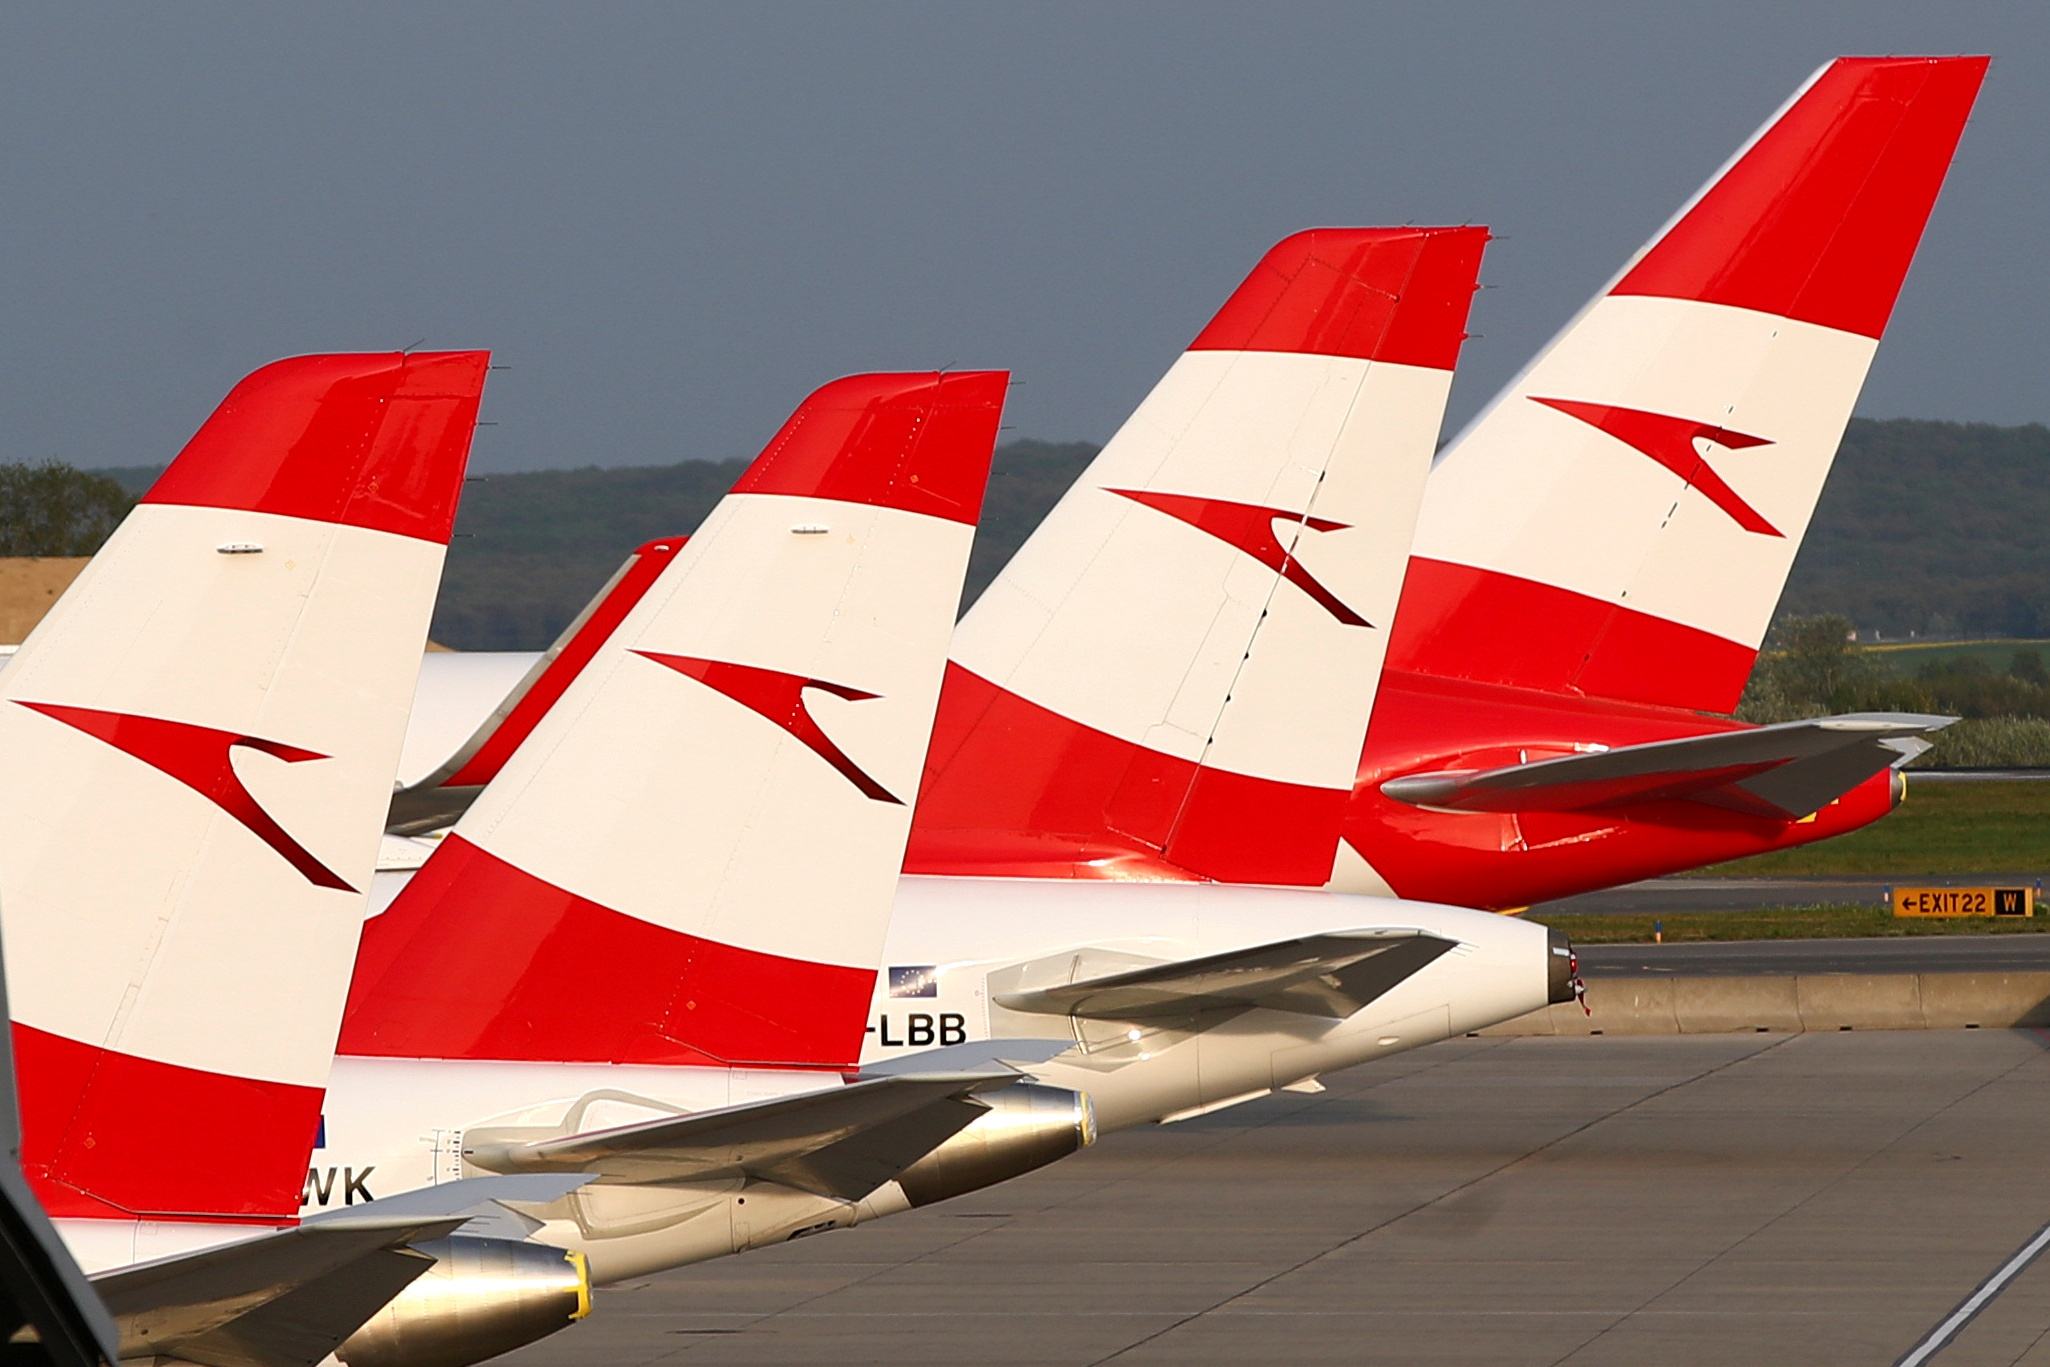 Austrian Airlines planes pictured in Vienna